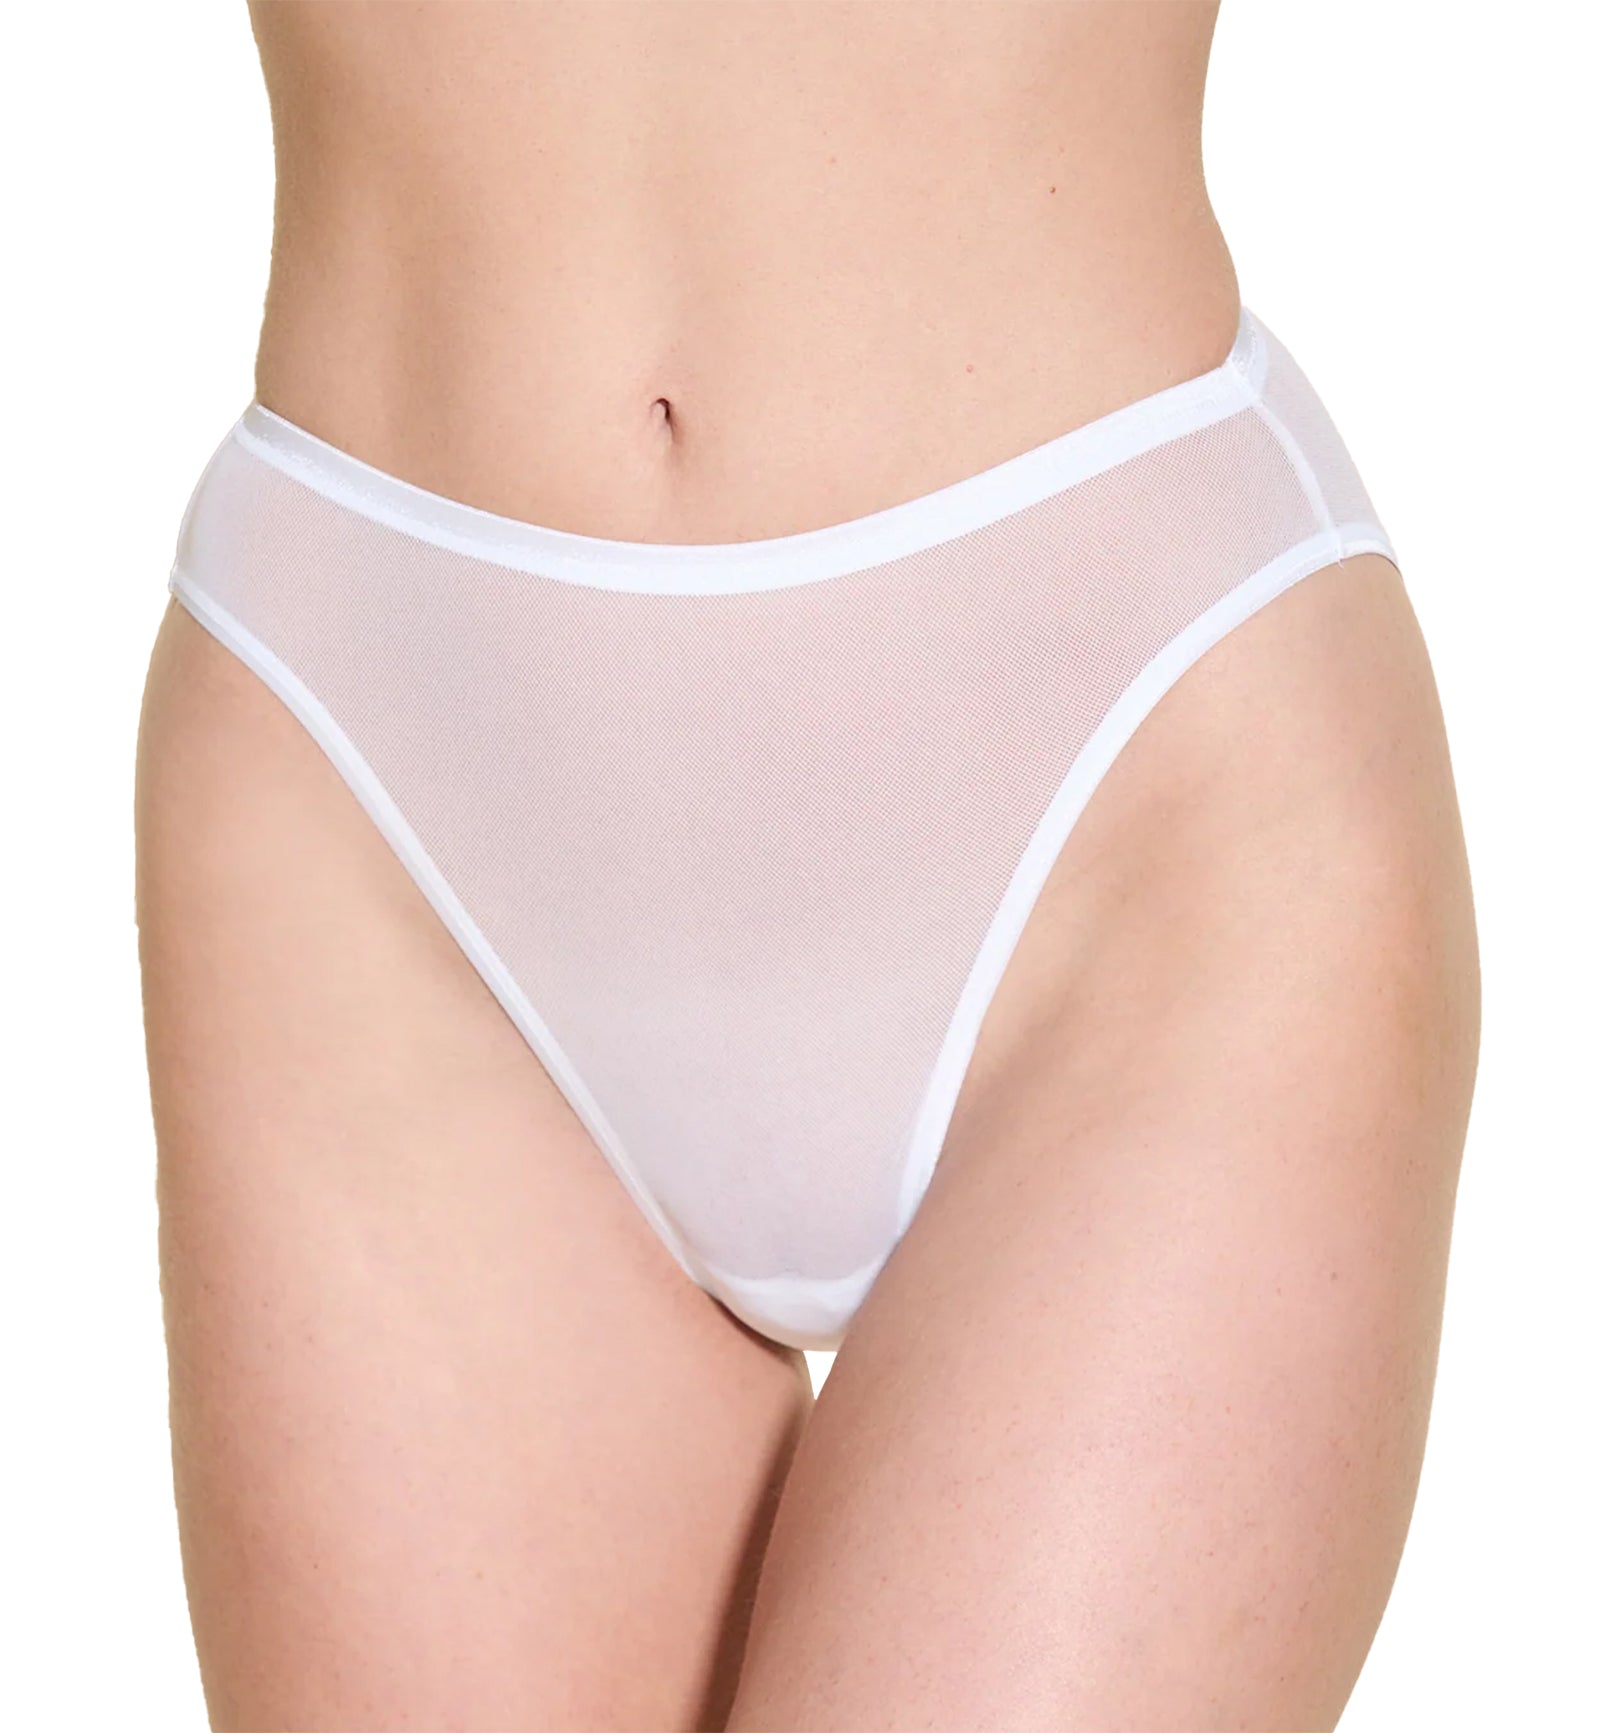 Cosabella Soire Confidence High Waist Bikini Panty (SOIRC0561),Small,White - White,Small